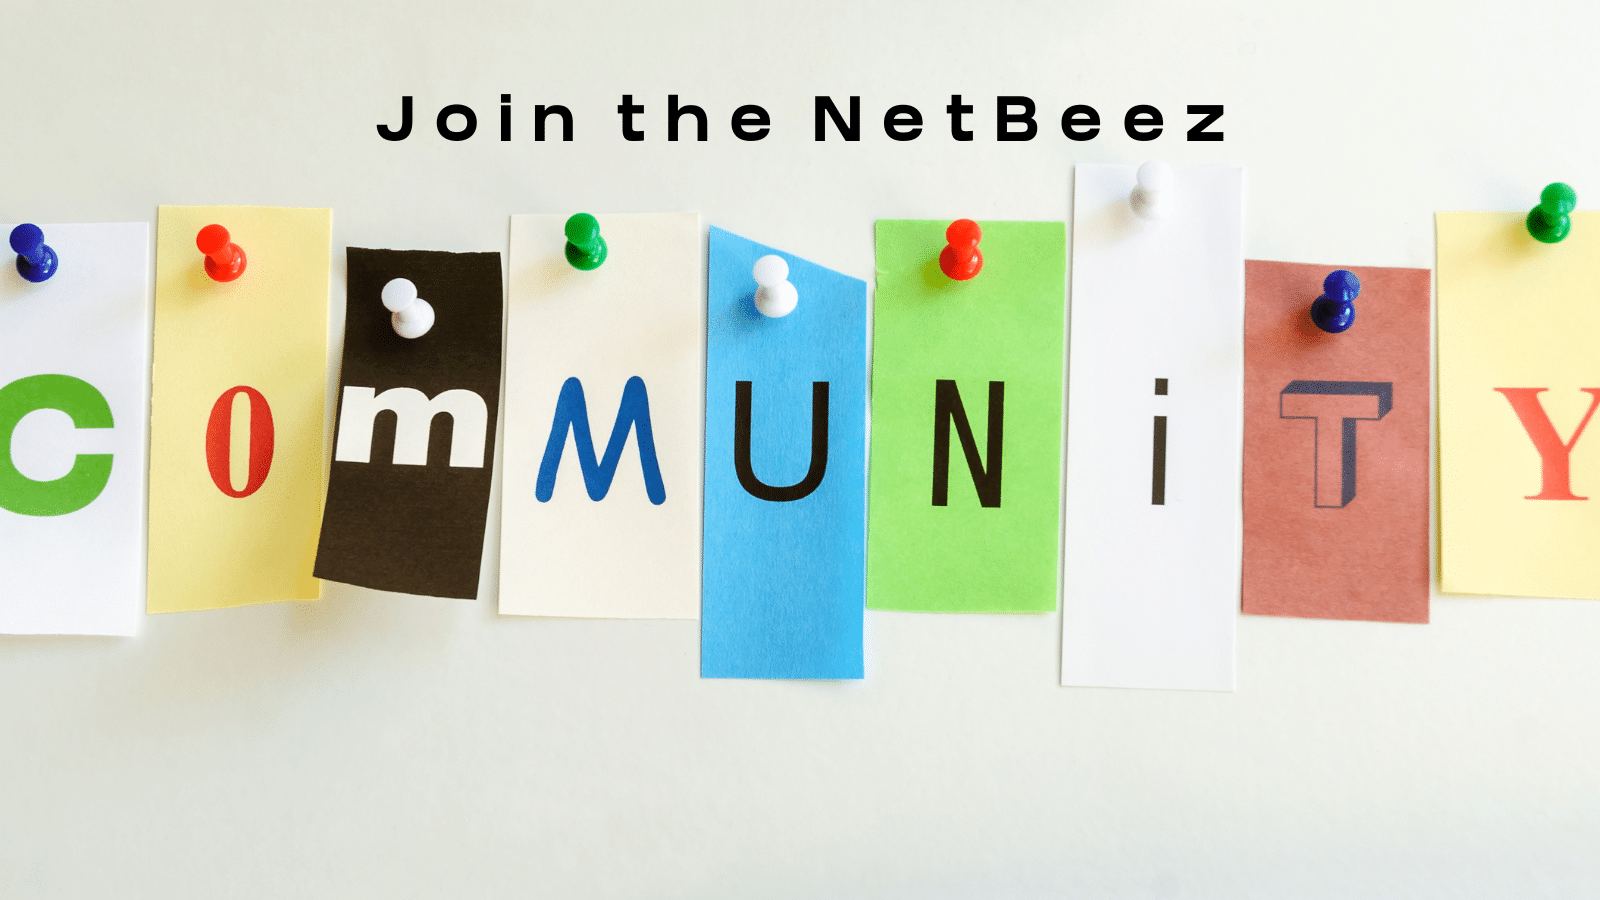 netbeez community blog post